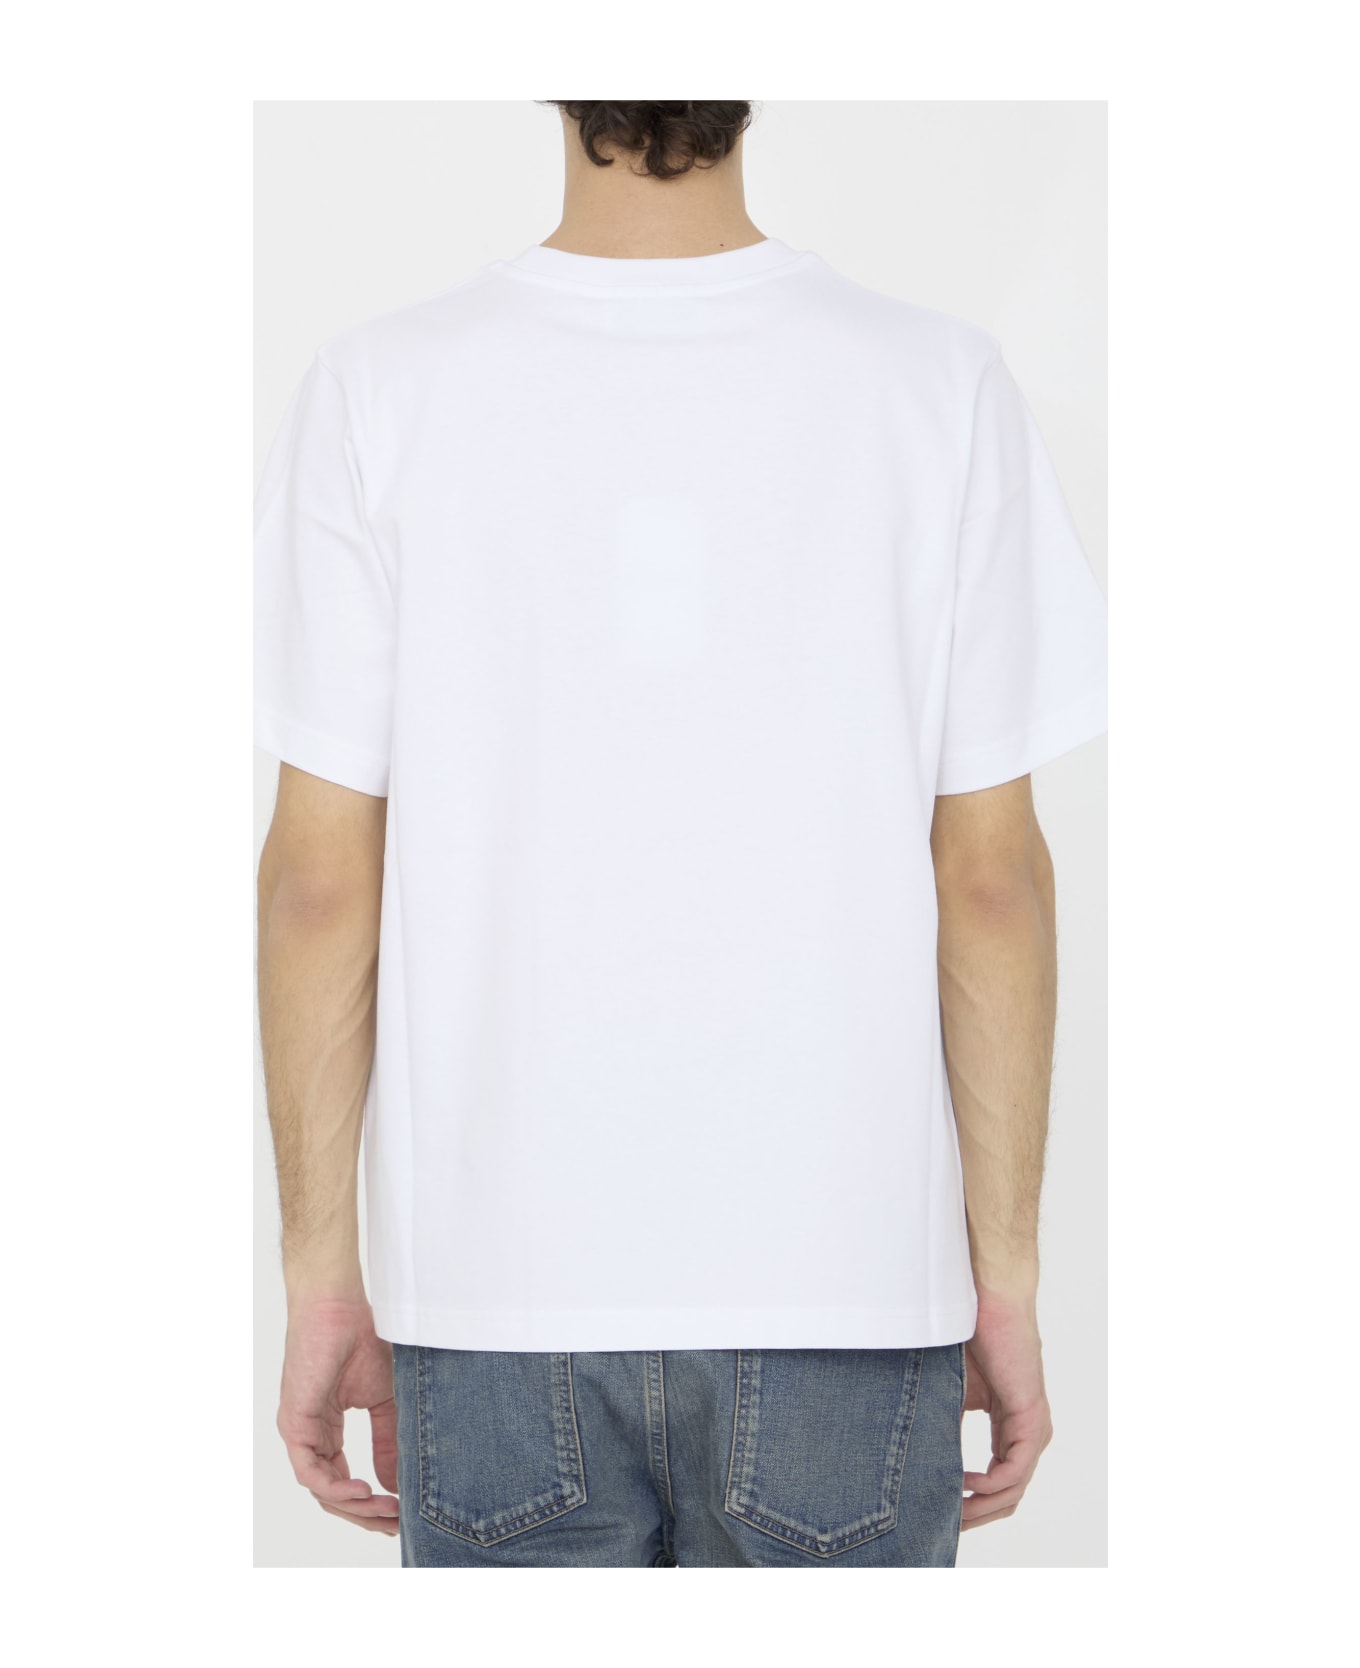 Casablanca Unity Is Power T-shirt - WHITE シャツ